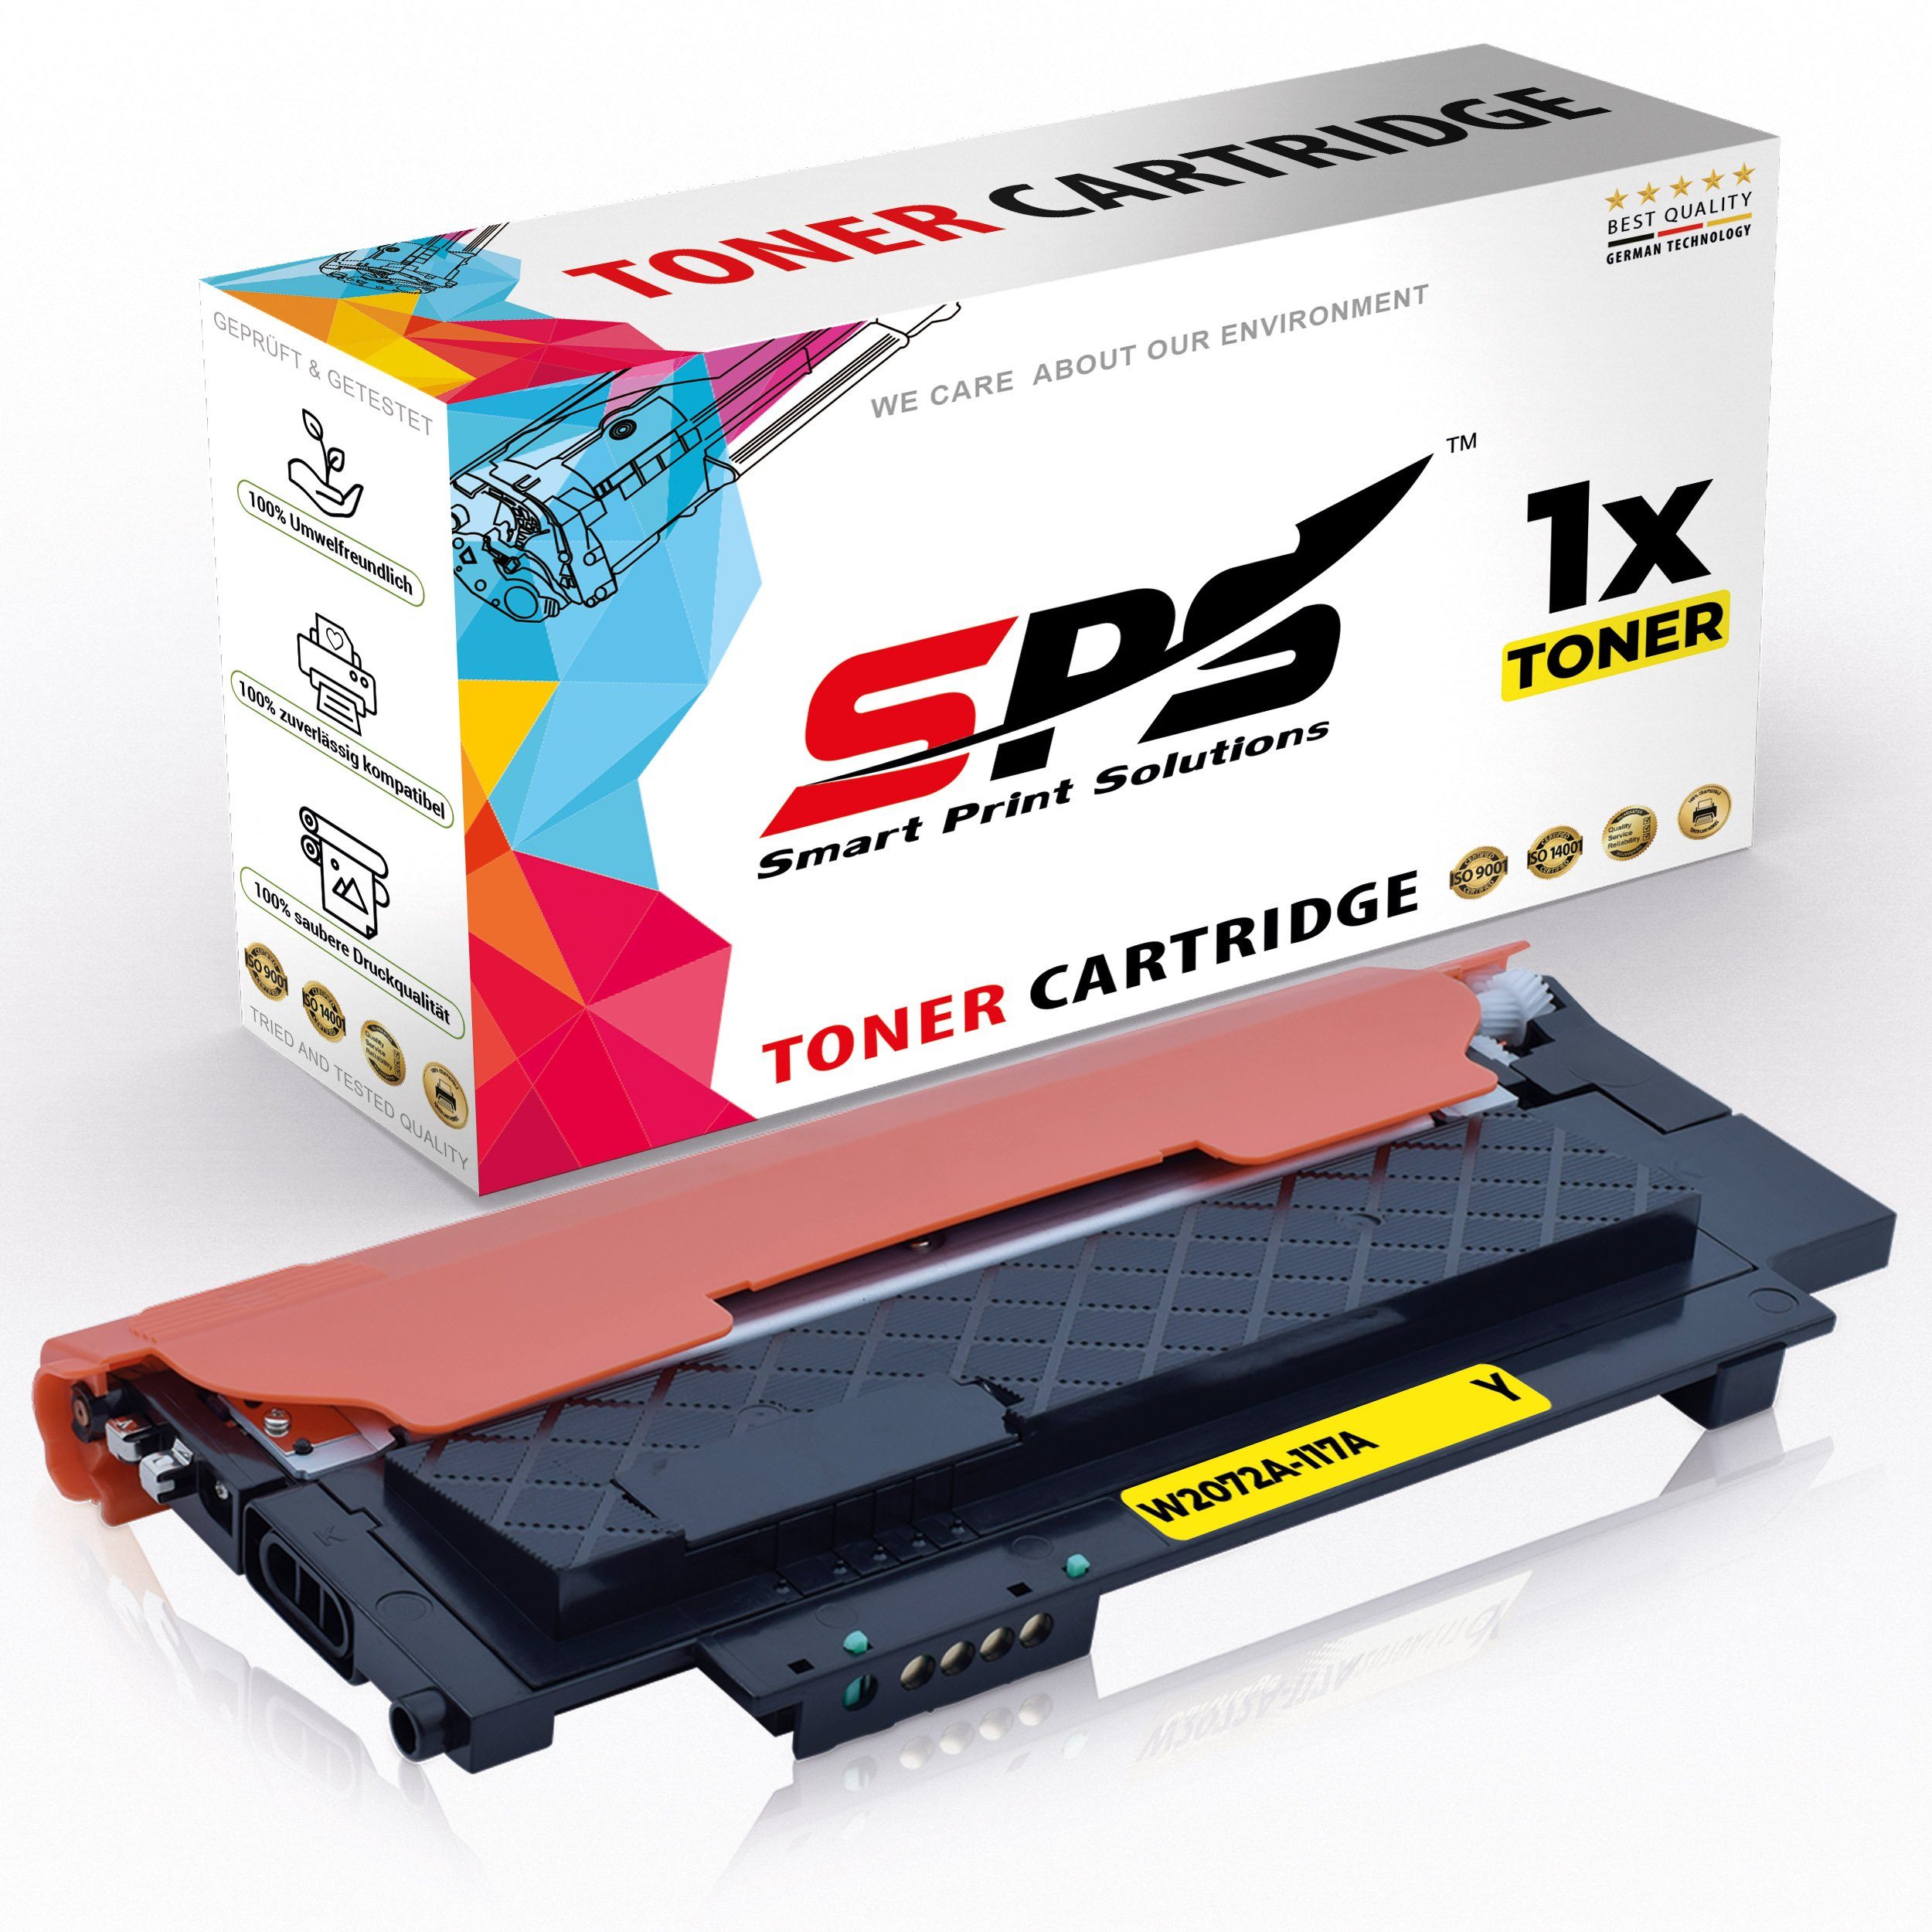 HP für 1x Color Laser Tonerkartusche (1er Toner) MFP Pack, 179 Kompatibel (W2072A/117A, SPS